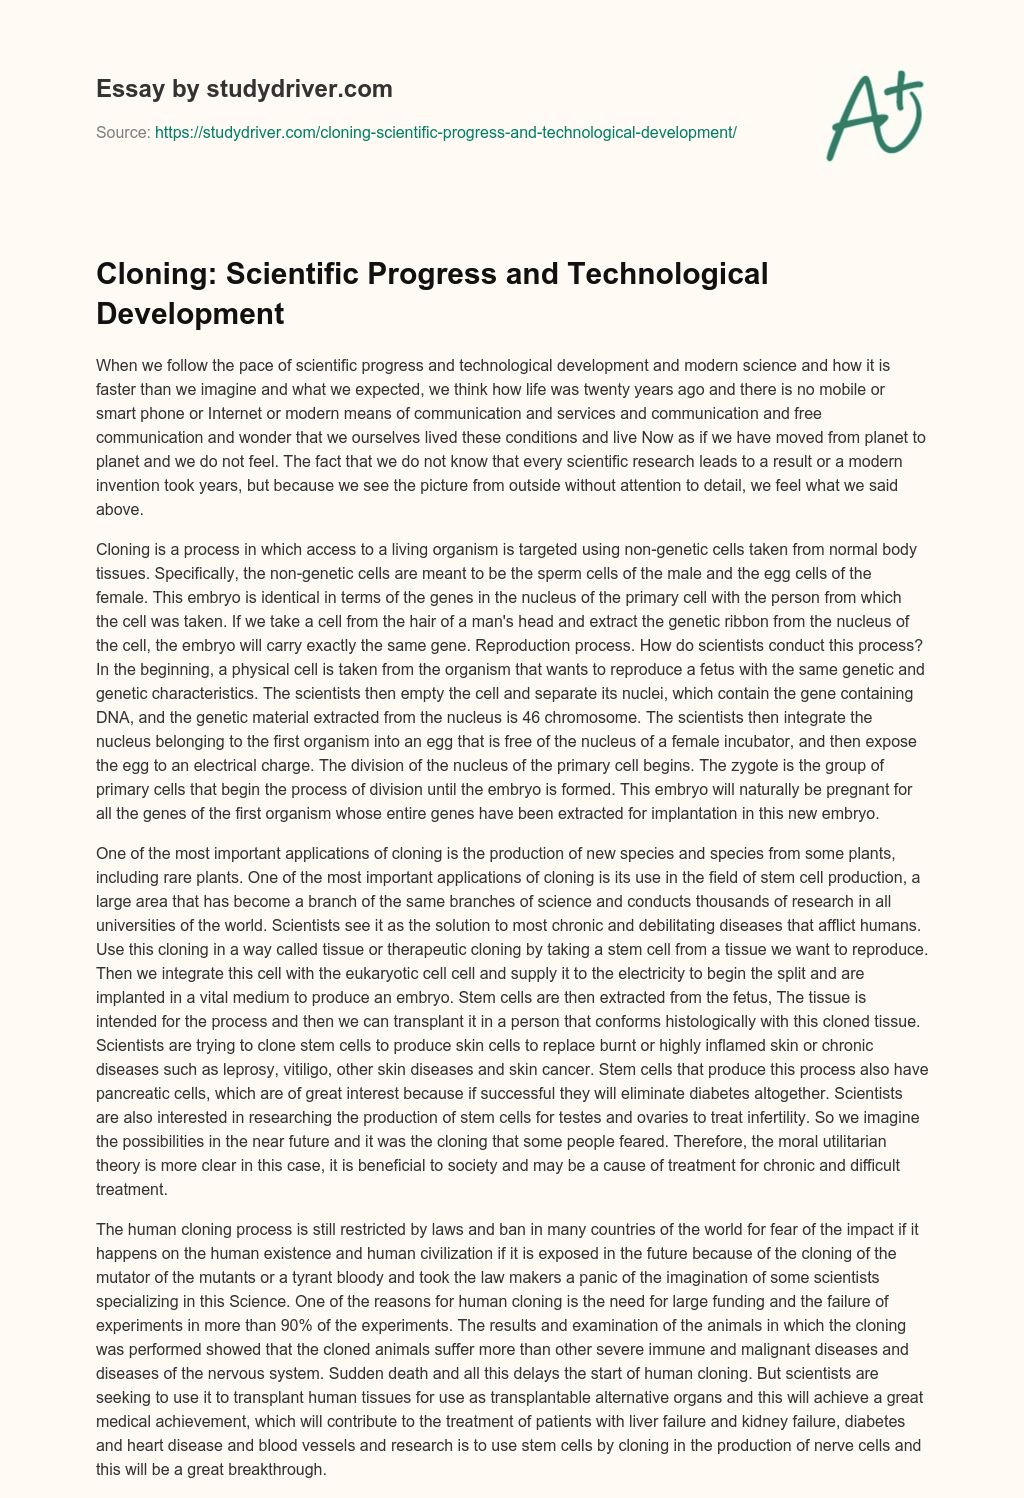 Cloning: Scientific Progress and Technological Development essay